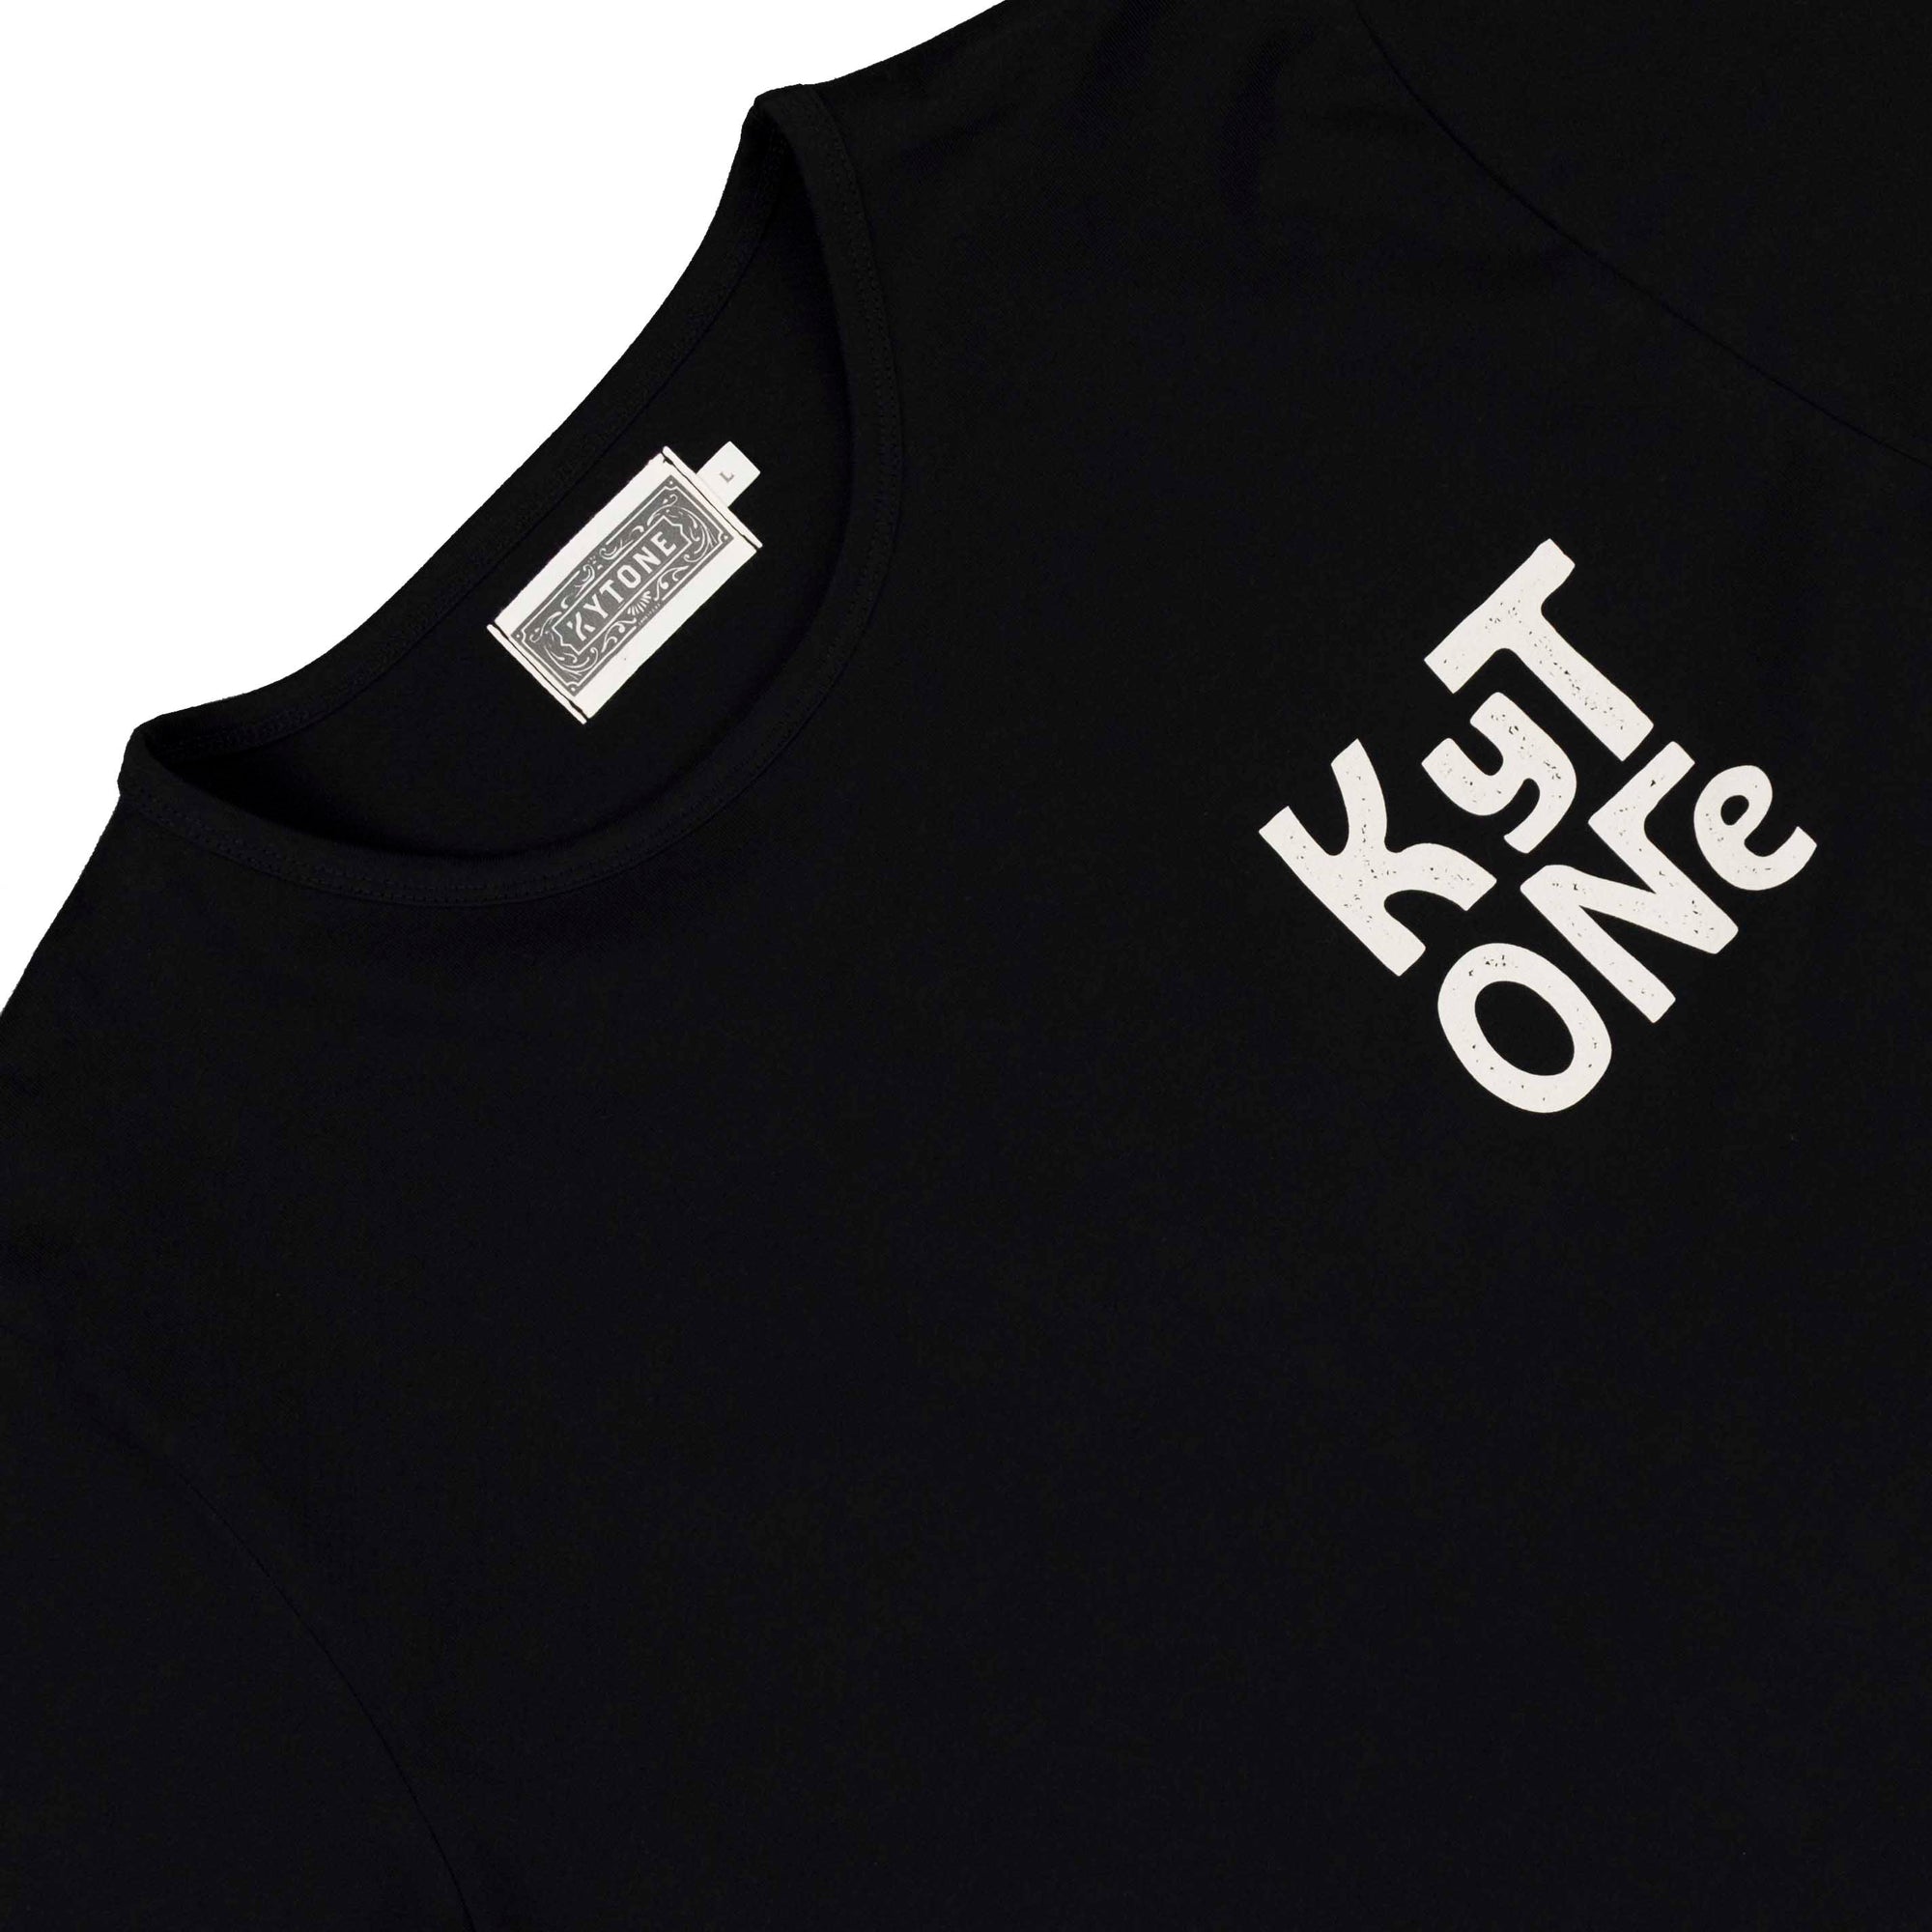 Kytone Stamp Black T'Shirt - Salt Flats Clothing